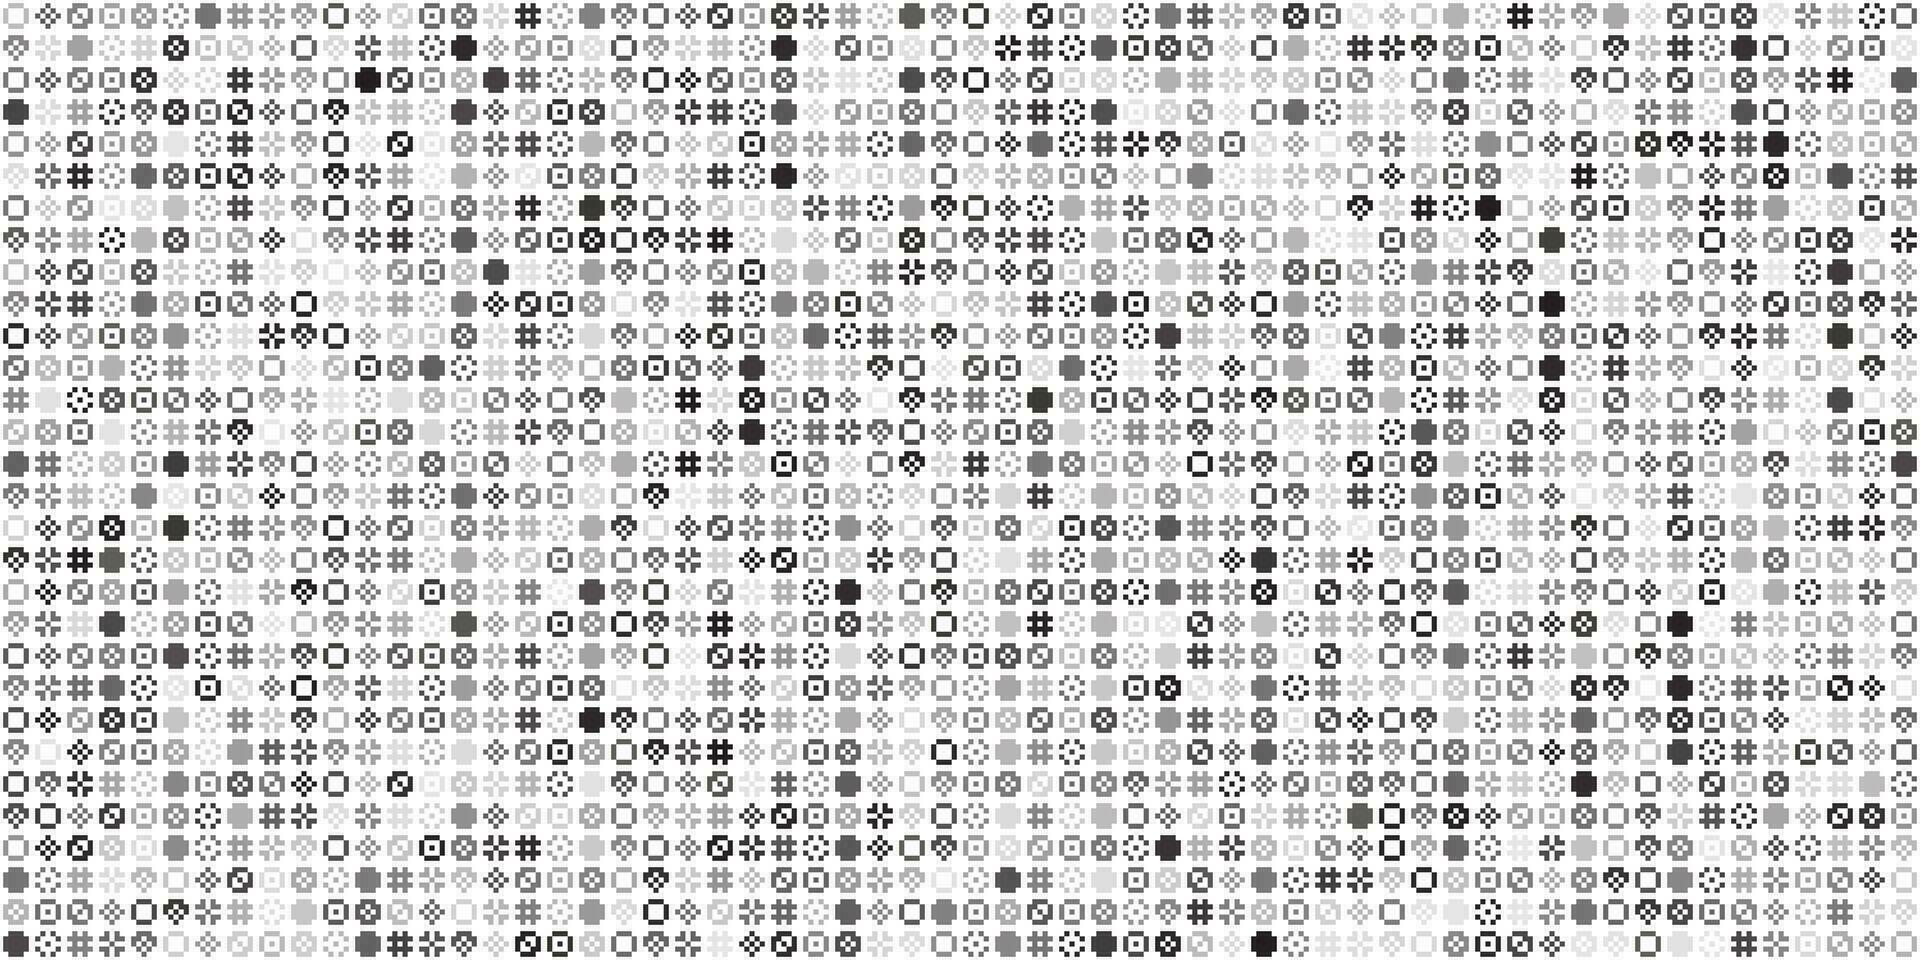 monocromático geométrico rede pixel arte fundo moderno Preto e branco abstrato mosaico textura vetor